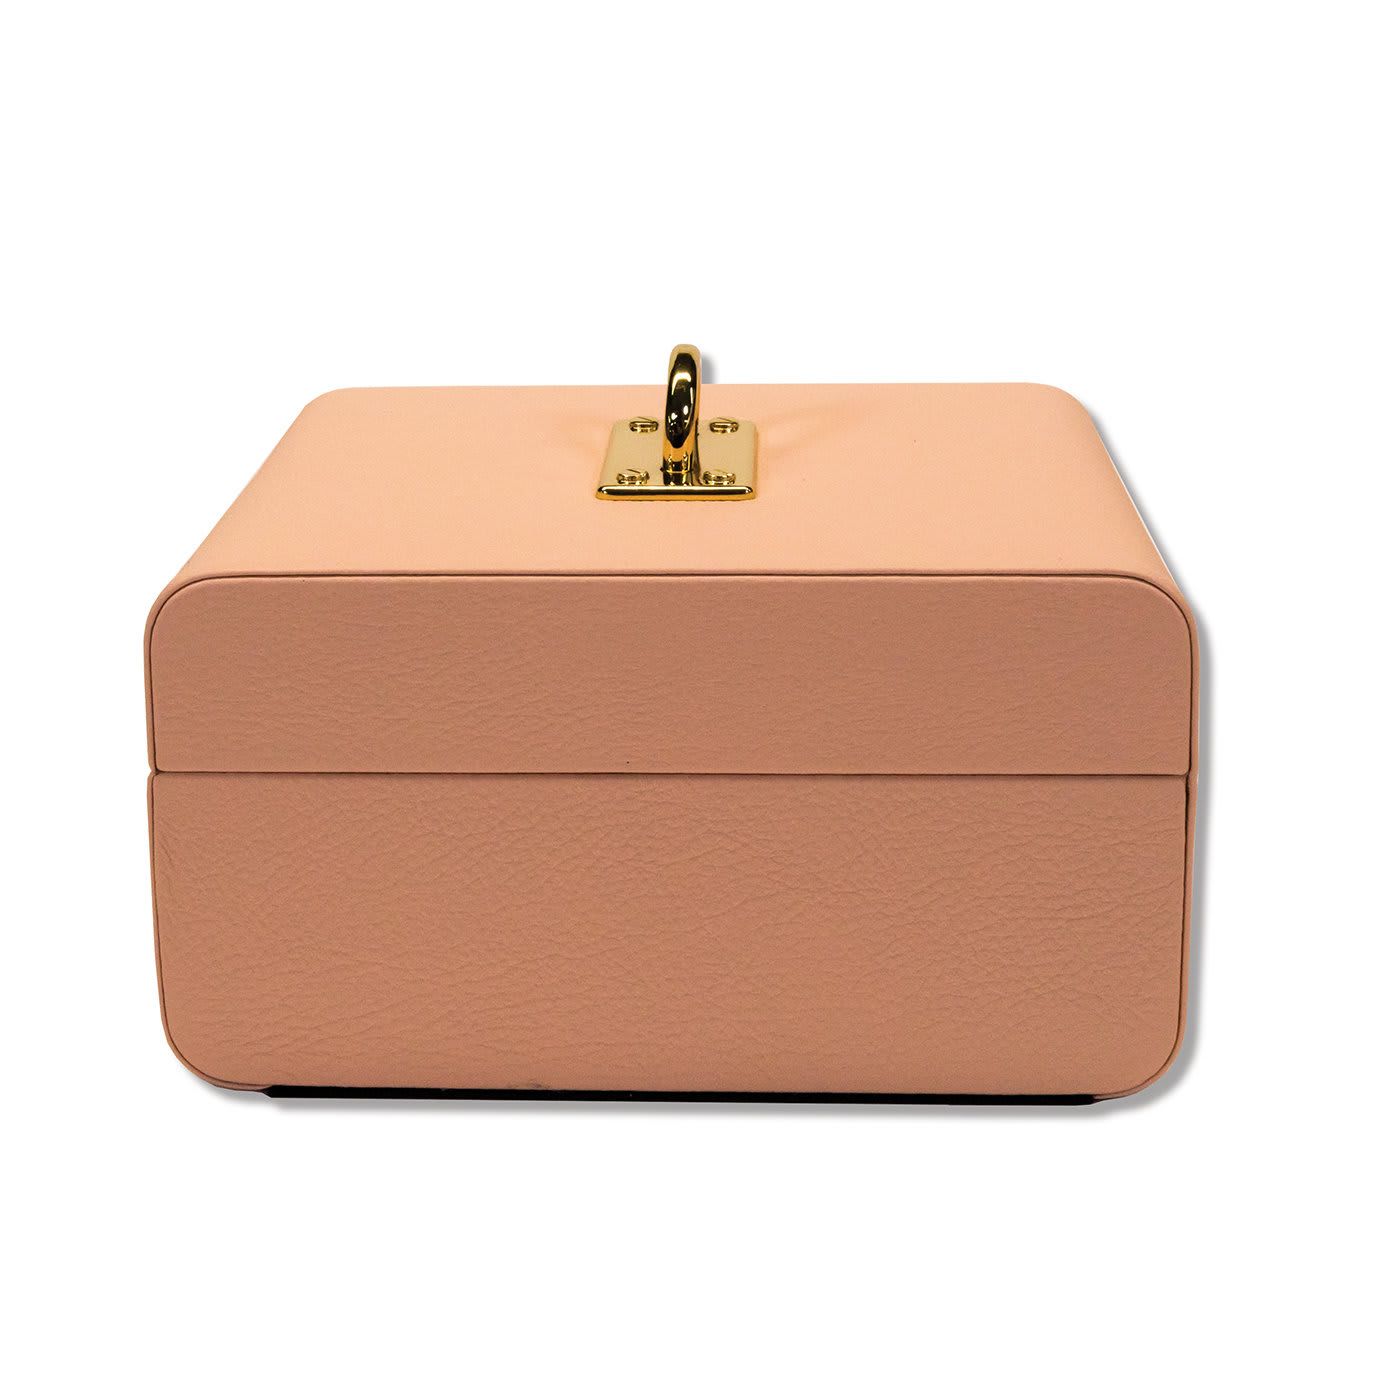 Arc Jewelry Box with Removable Tray - Cassigoli